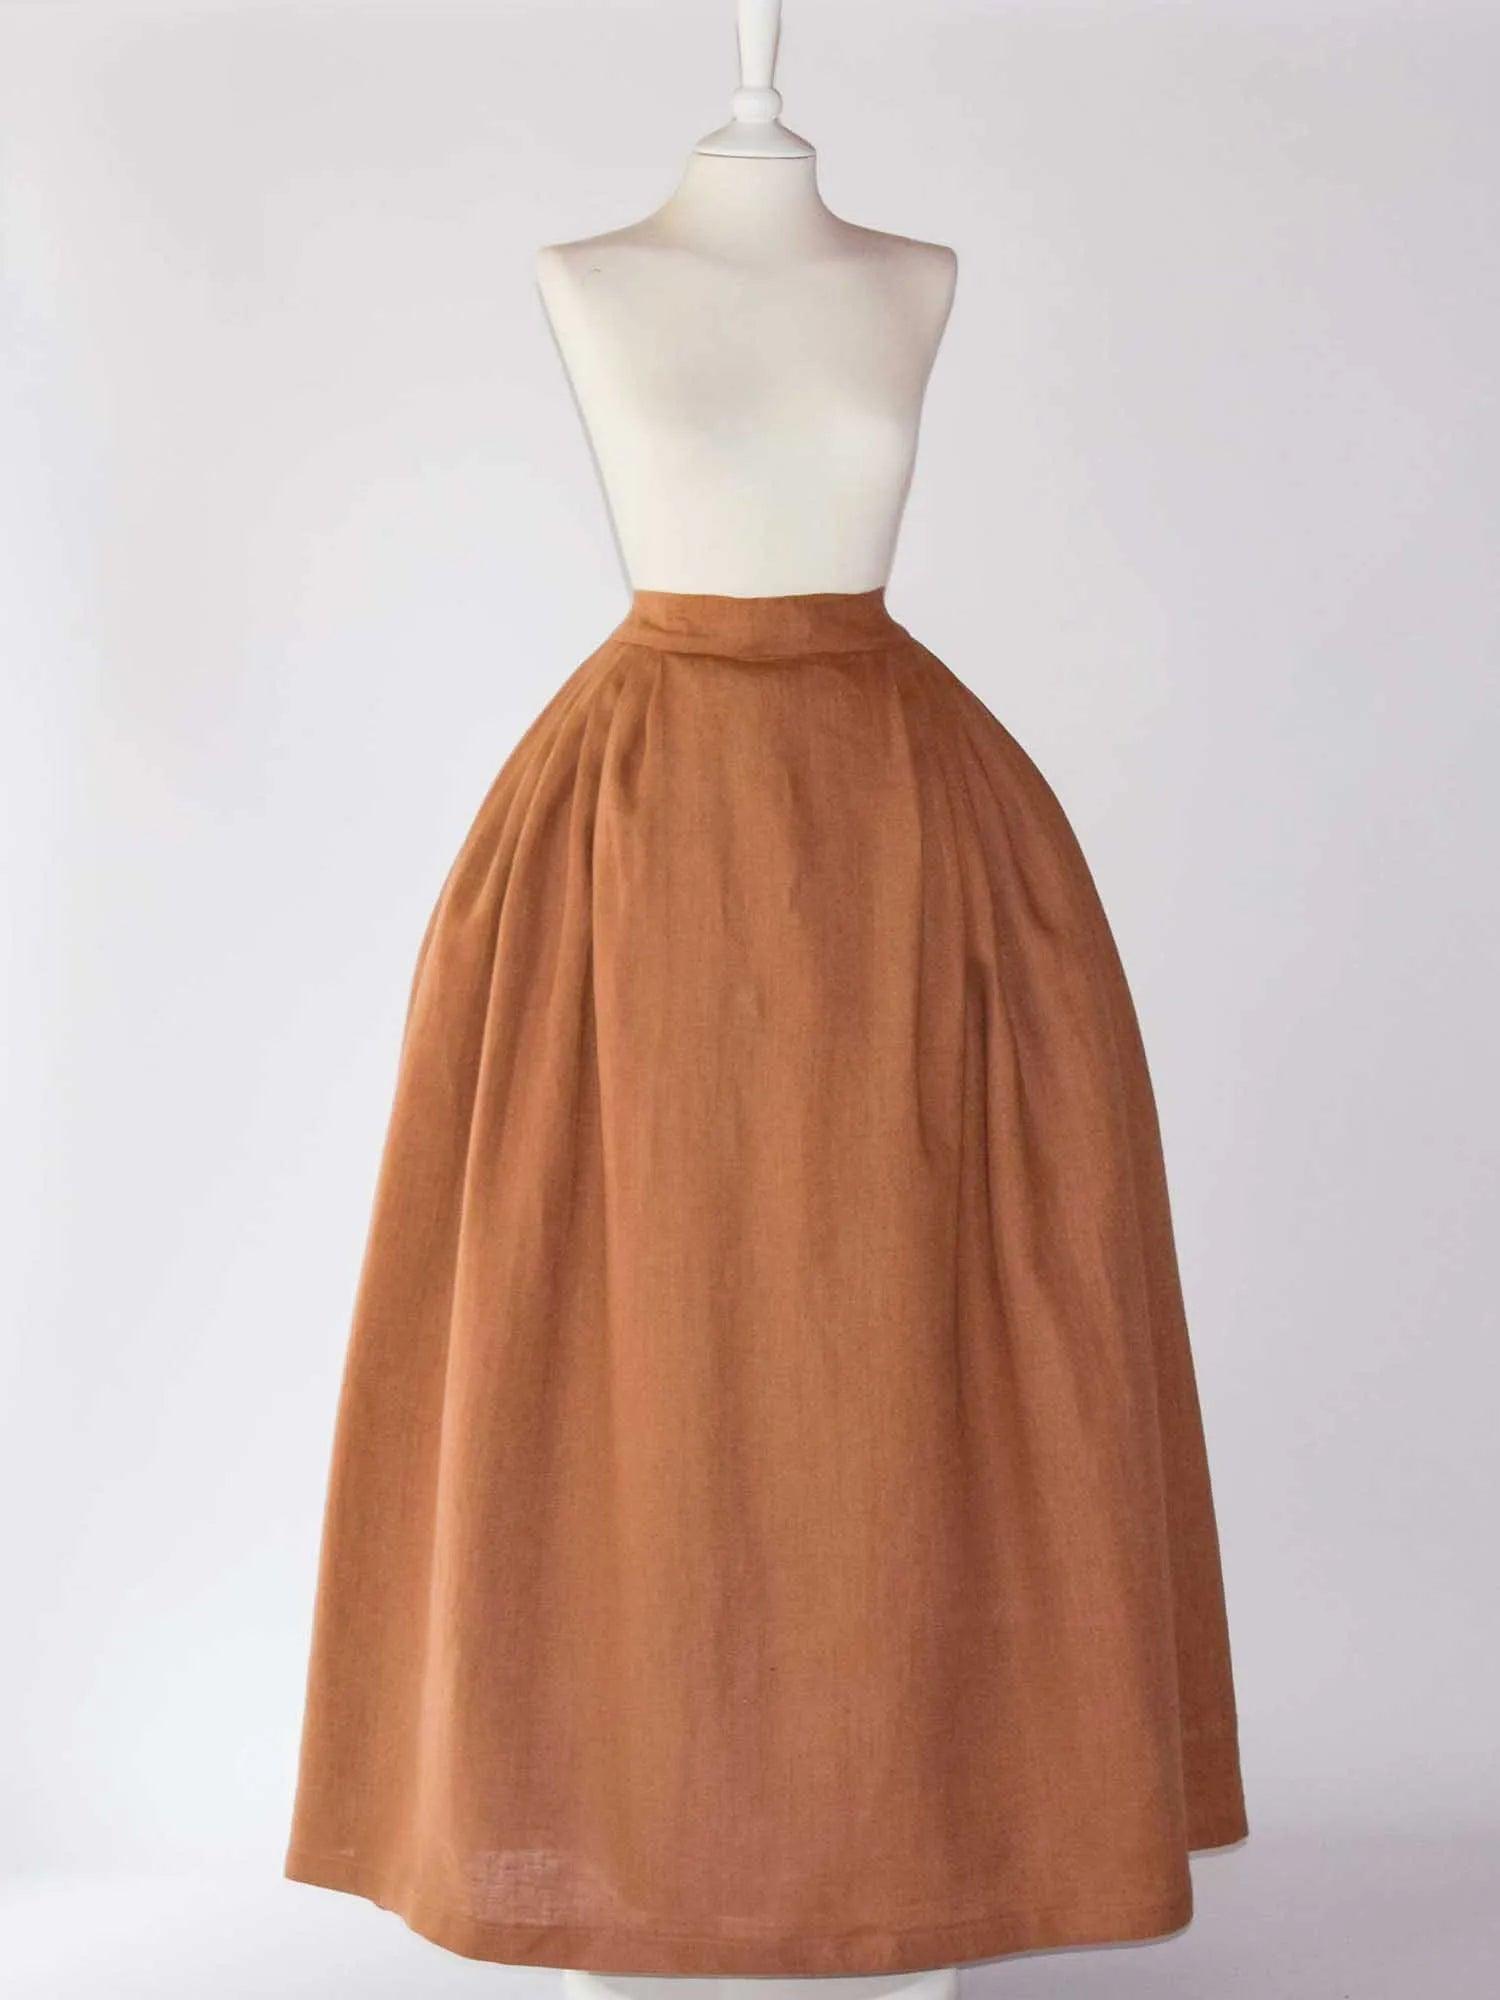 HELOISE, Historical Skirt in Toffee Linen - Atelier Serraspina